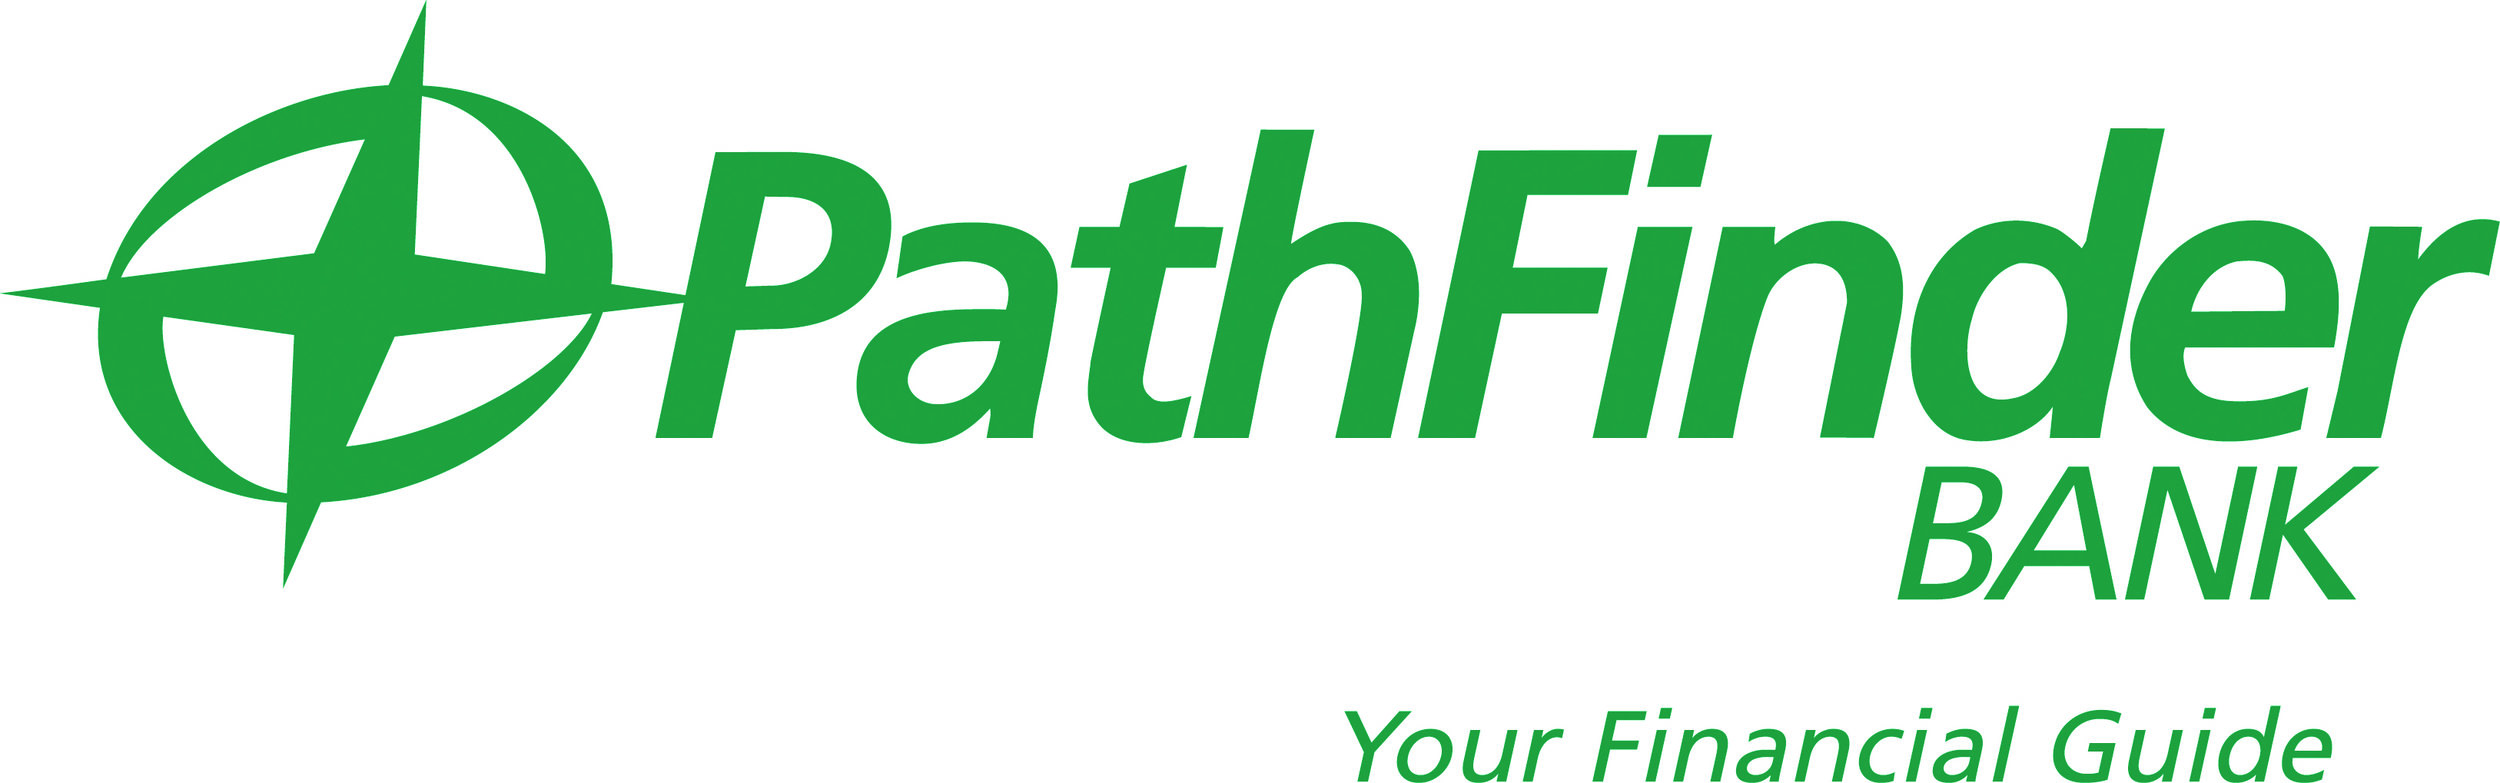 Pathfinder Bank Logo with tag line.jpg